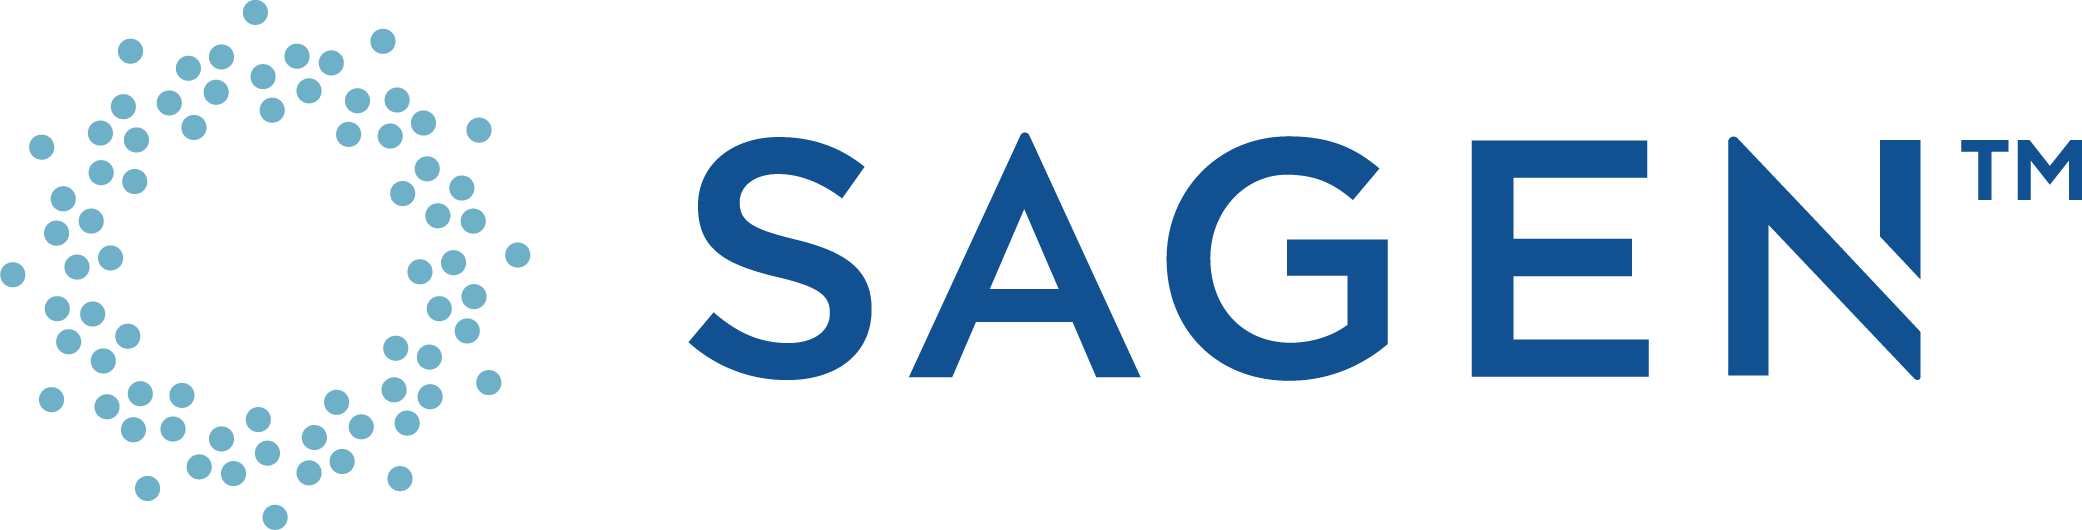 Sagen logo with name